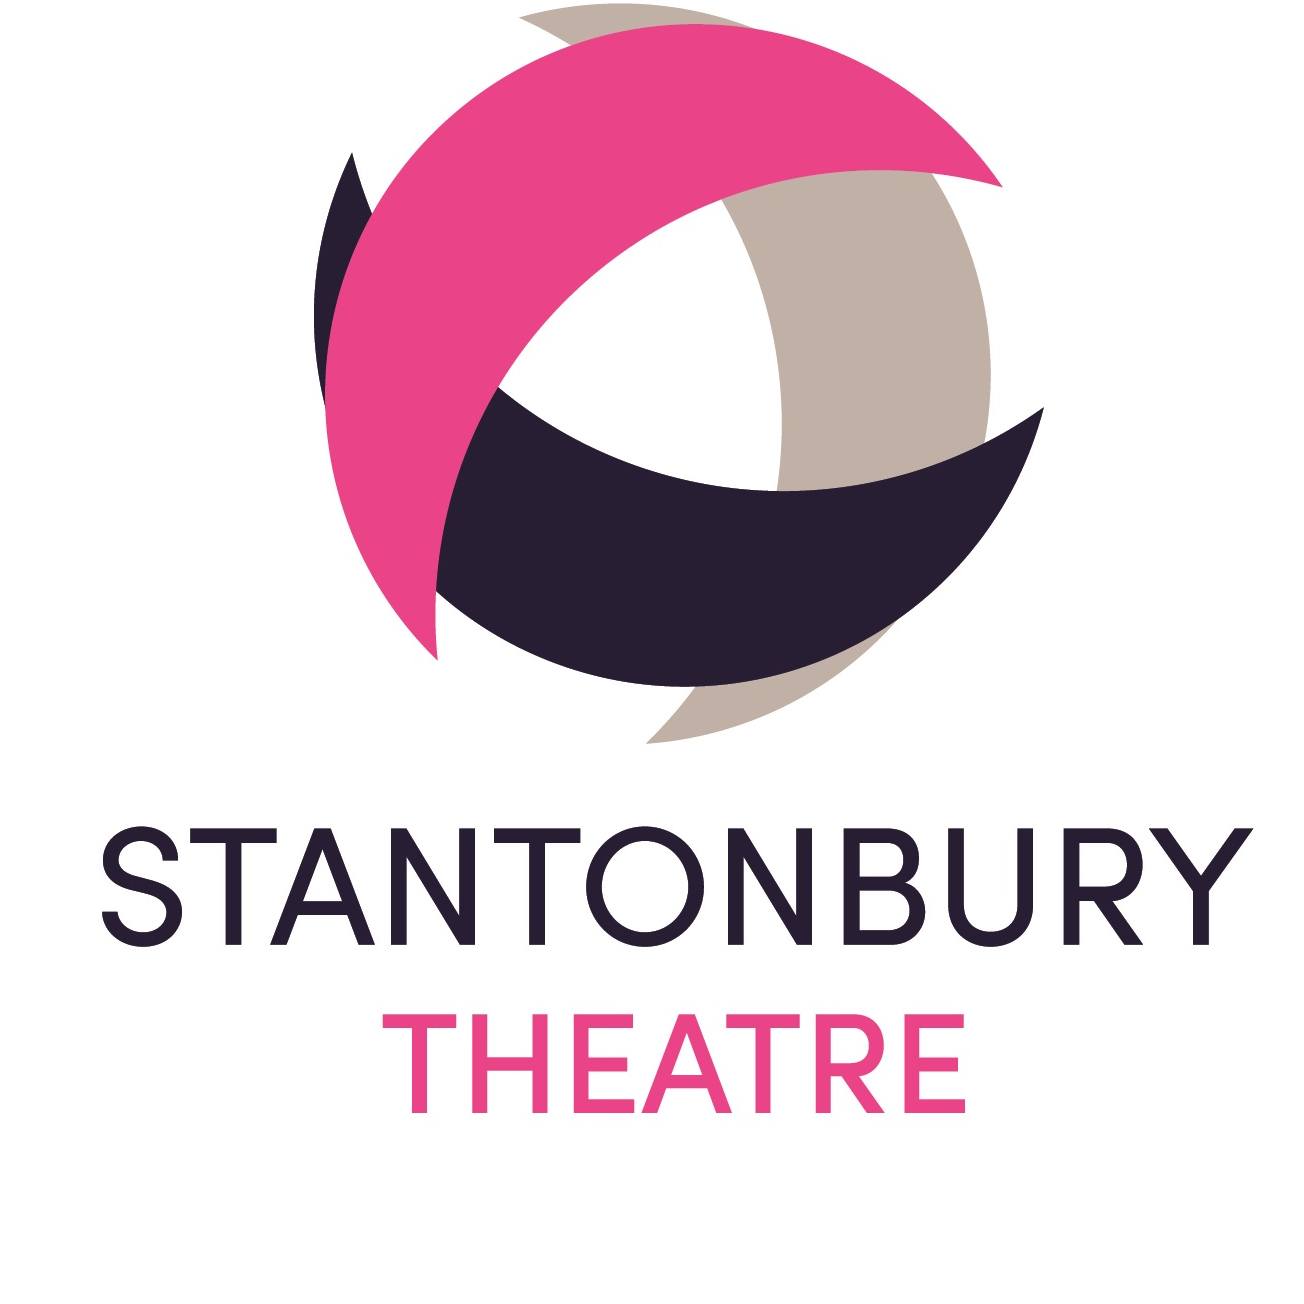 Stantonbury Theatre's logo